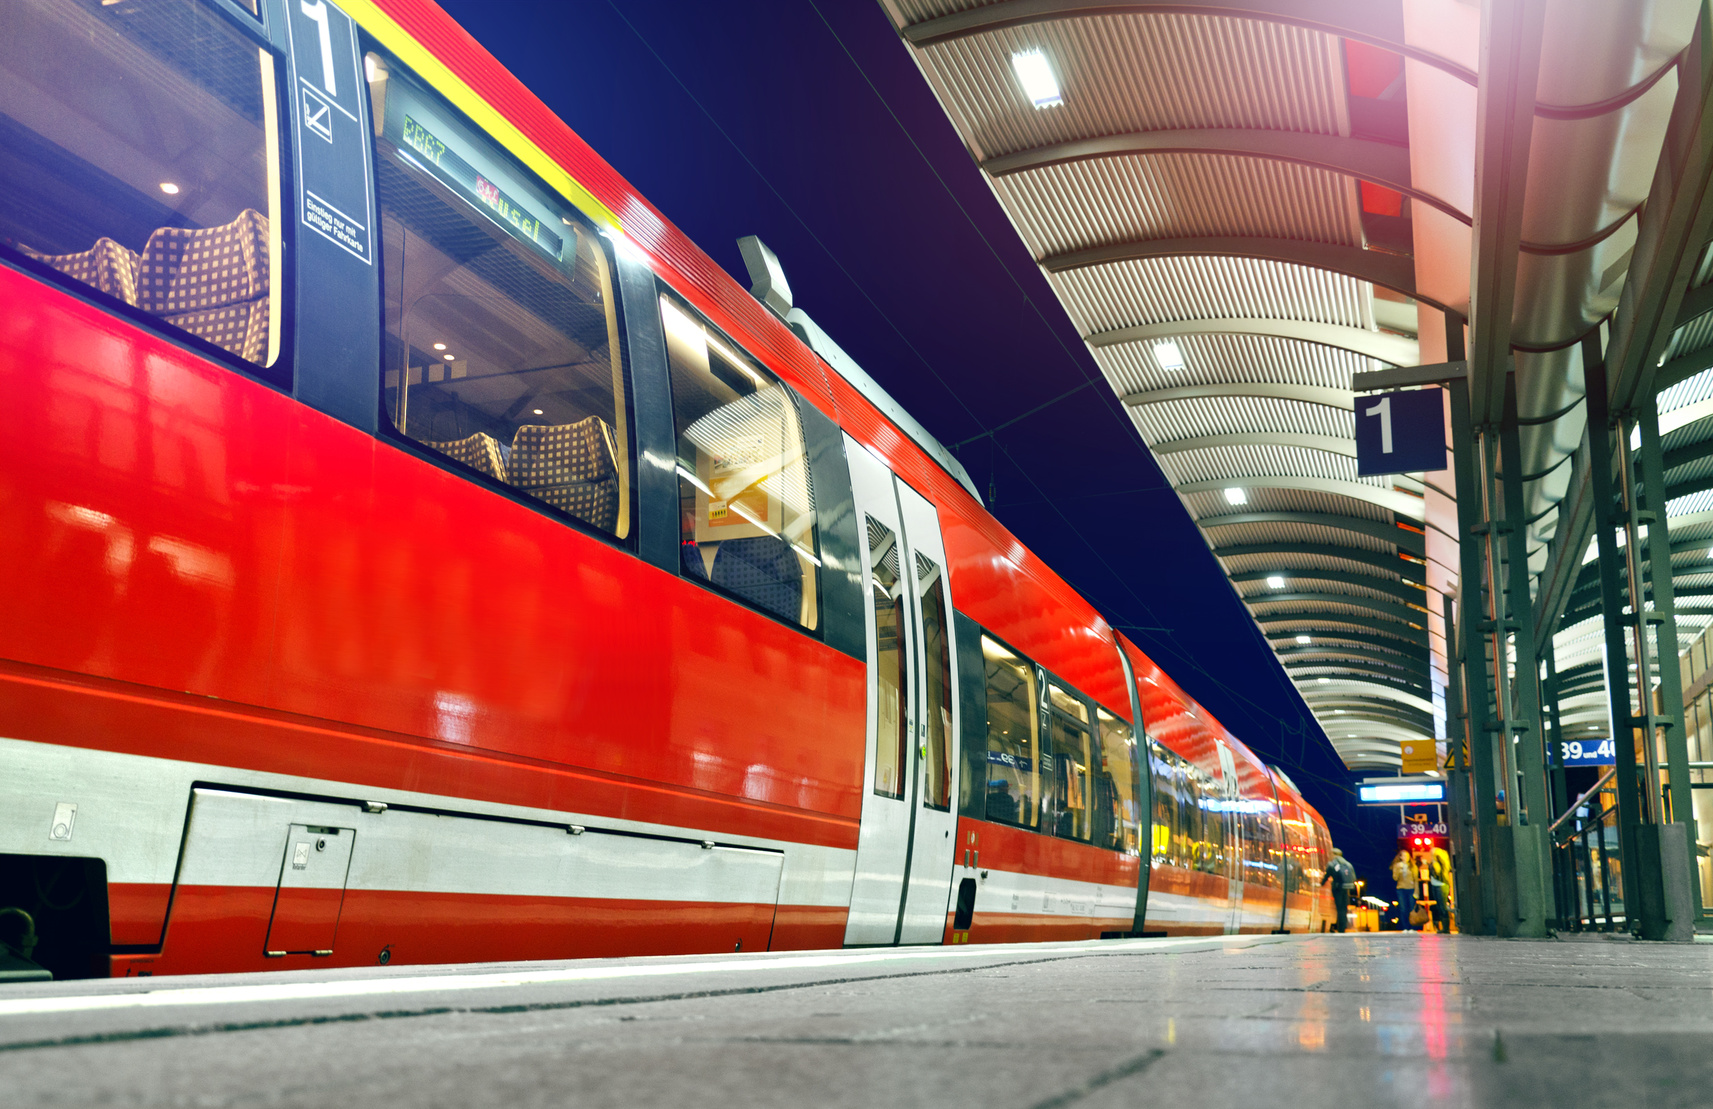 Münchner S-Bahn-Fahrer onanierte vor den Fahrgästen